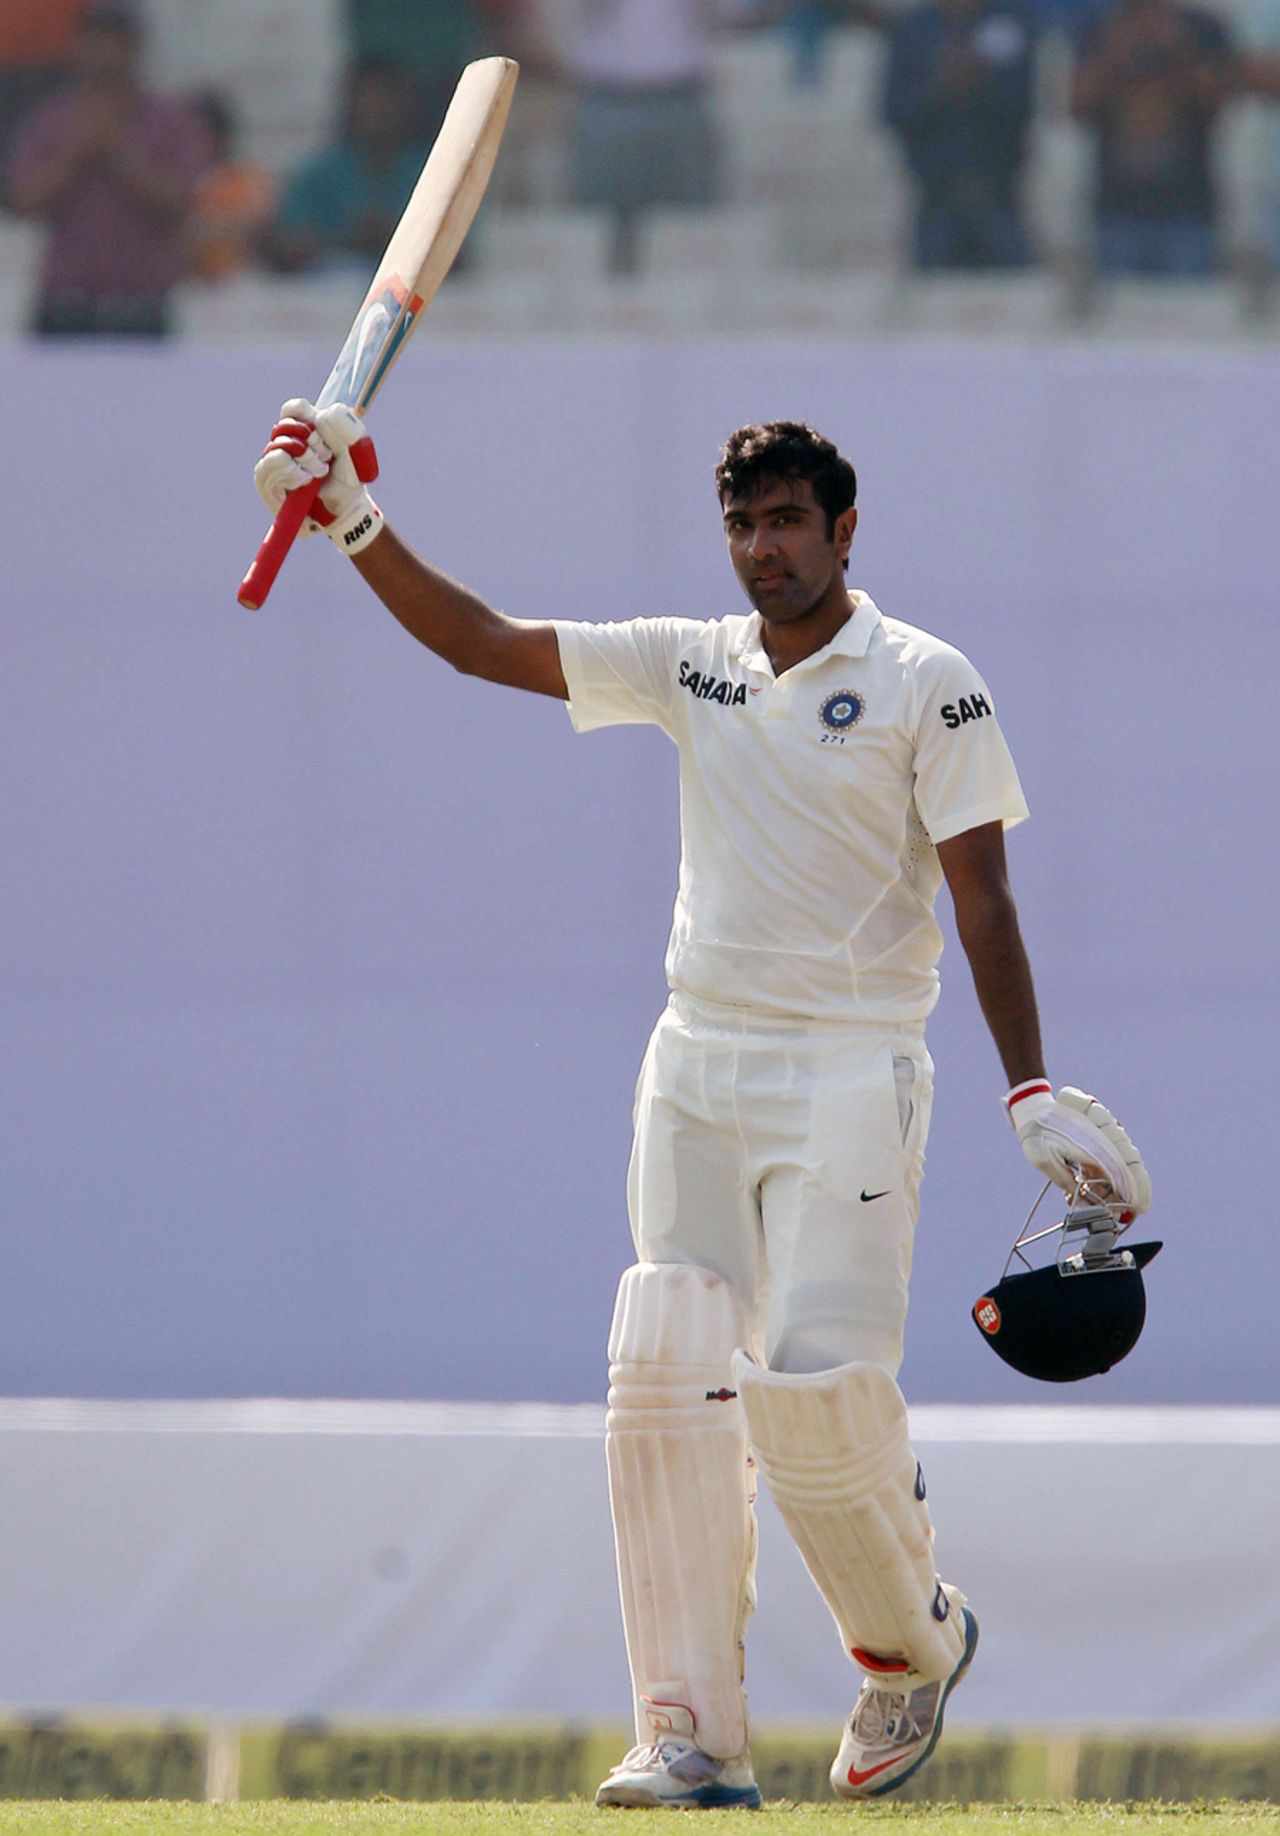 R Ashwin scored his second Test hundred, India v West Indies, 1st Test, Kolkata, 3rd day, November 8, 2013